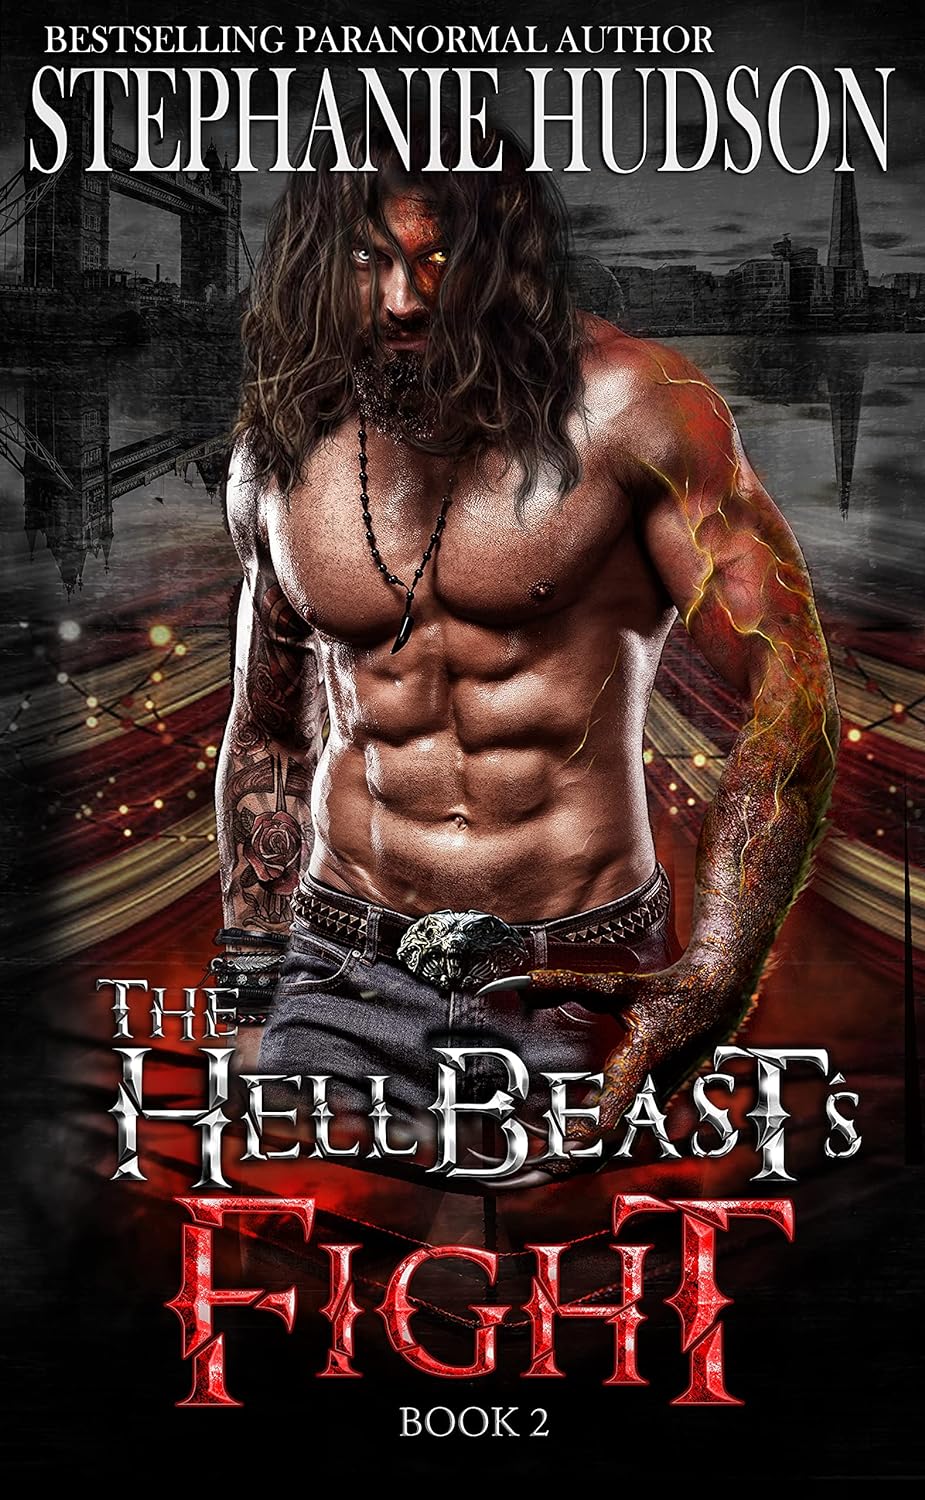 The Hellbeast’s Fight (The HellBeast King Book 2) by Stephanie Hudson